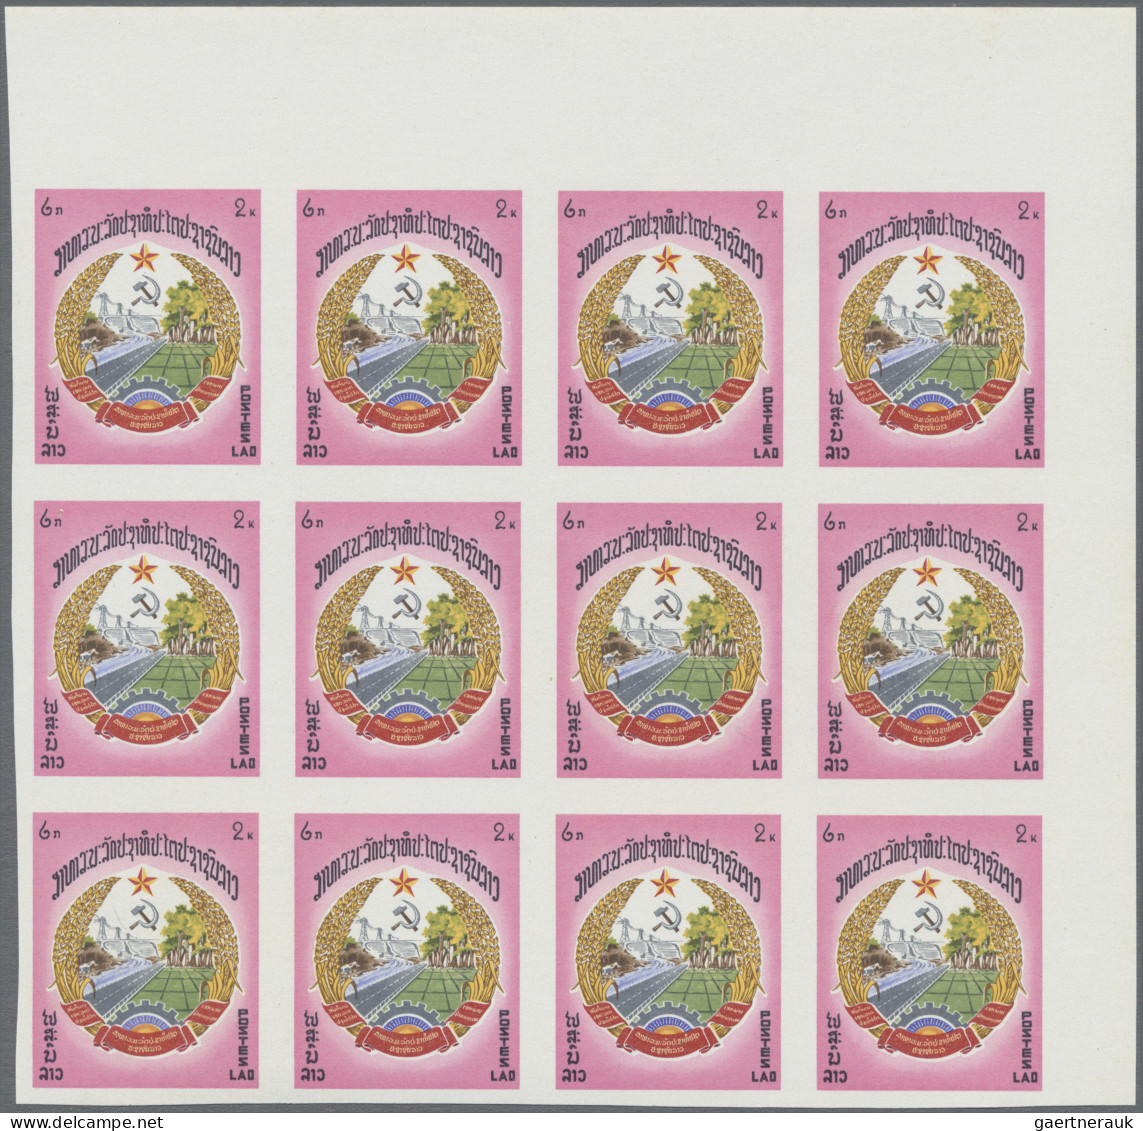 Laos: 1976 '1st Anniv. of Dem. Republic' cpl. set of five in top right corner bl